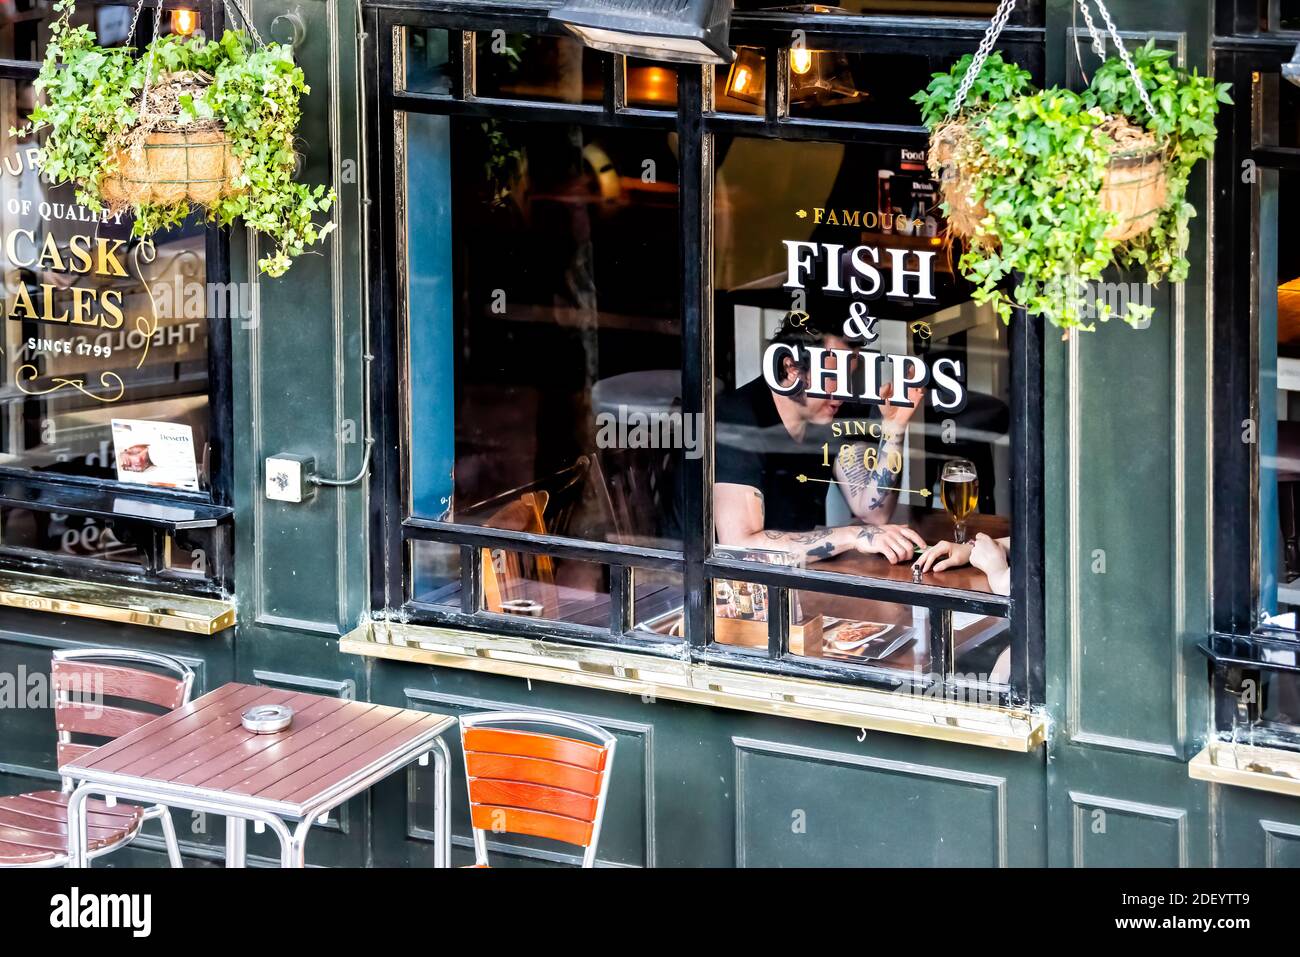 London, UK - June 22, 2018: French fries fish chips restaurant Greene King pub tavern bar restaurant sign on building exterior with people inside sitt Stock Photo